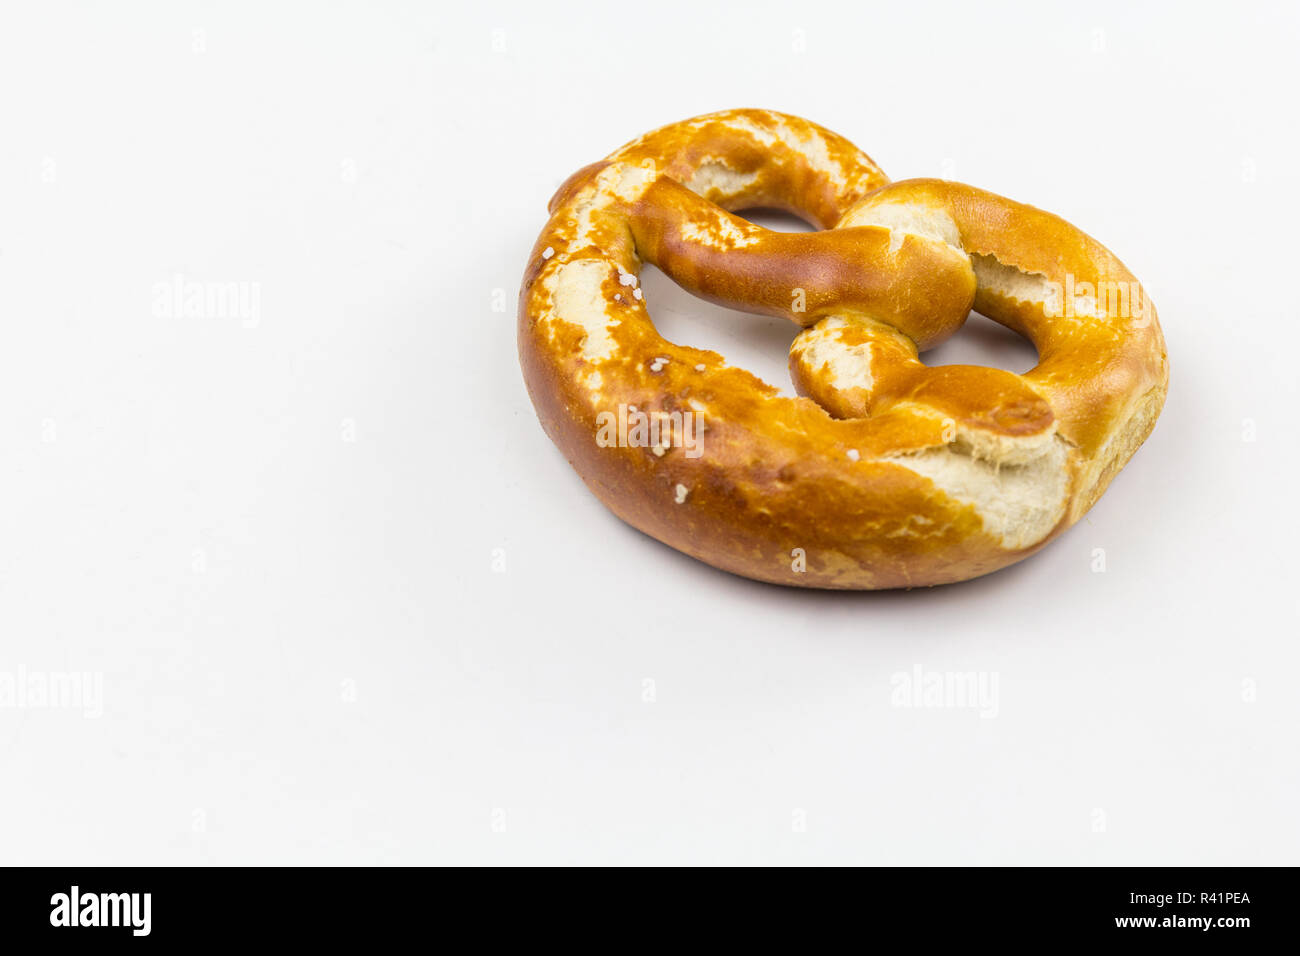 laugengebÃ¤ck - a bavarian pretzel for a hearty snack,free Stock Photo